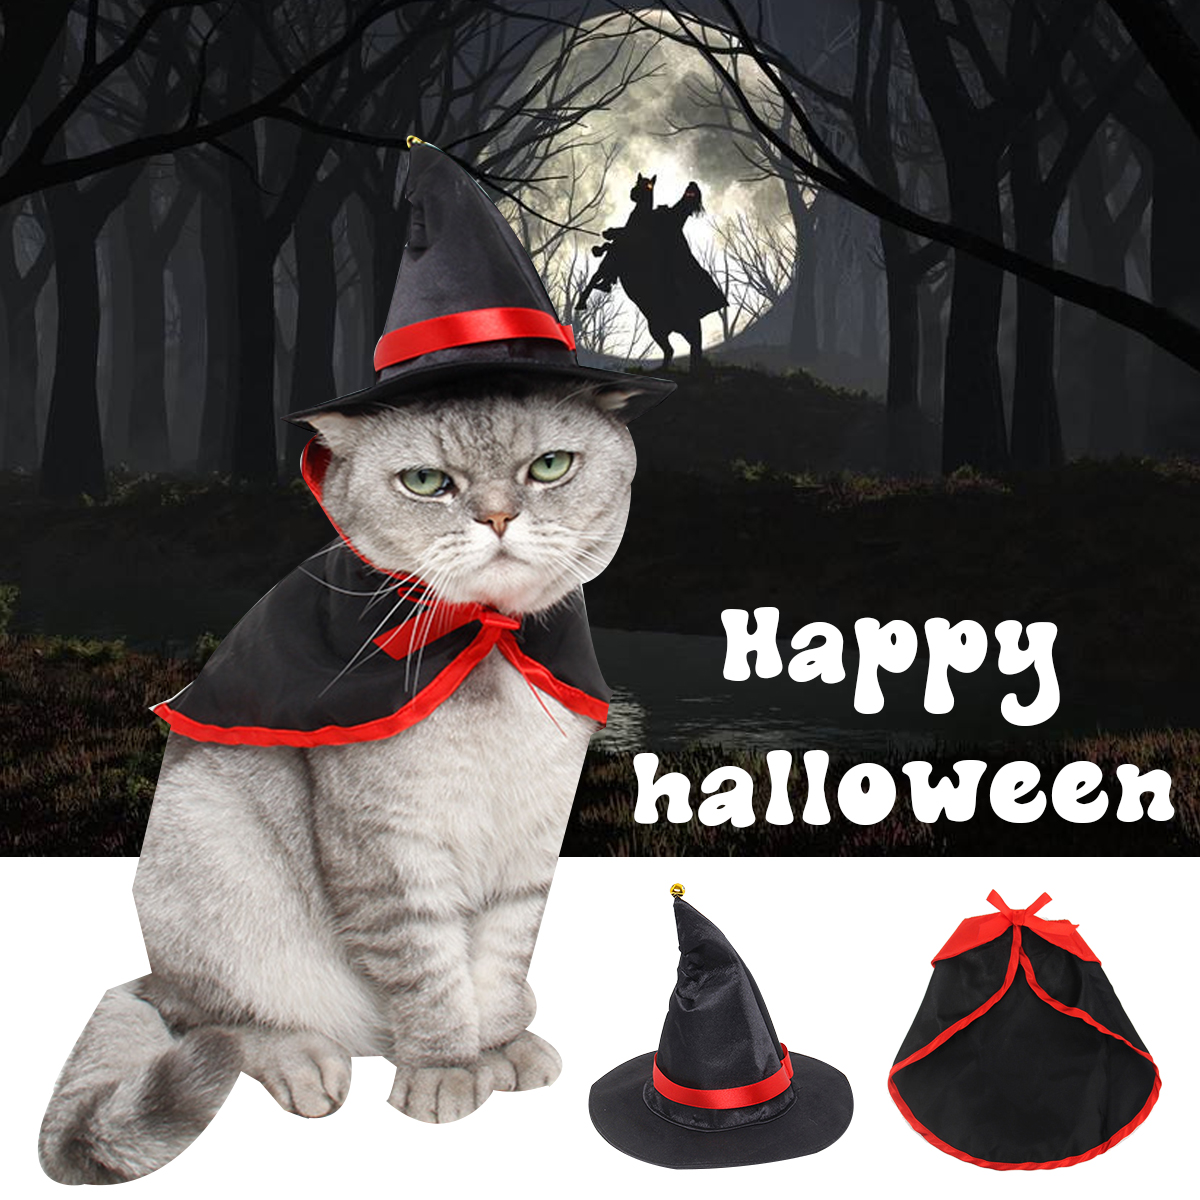 Halloween-Costume-Pet-Cat-Small-Dog-Vampire-Hat-Cape-Cloak-Halloween-Cosplay-Fancy-Dress-Costume-for-1807985-1